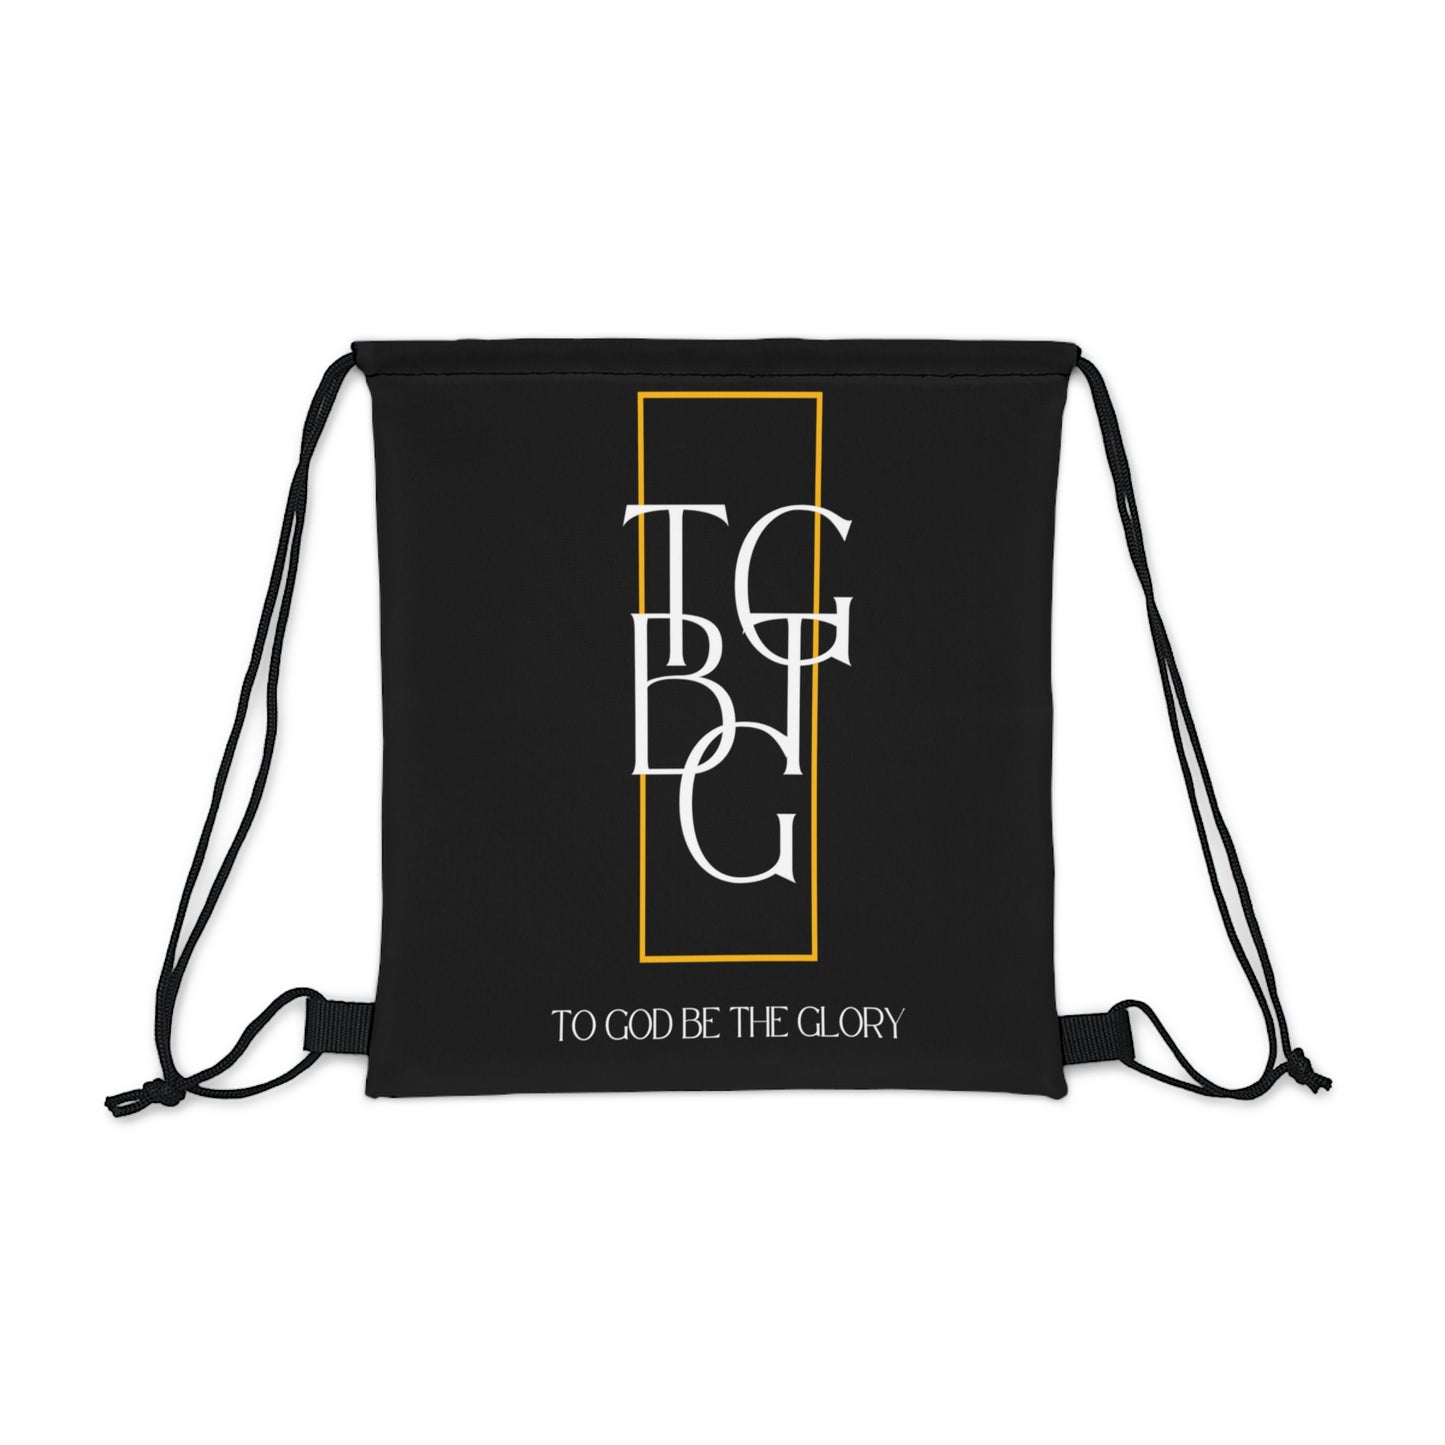 TGBTG Outdoor Drawstring Bag Black